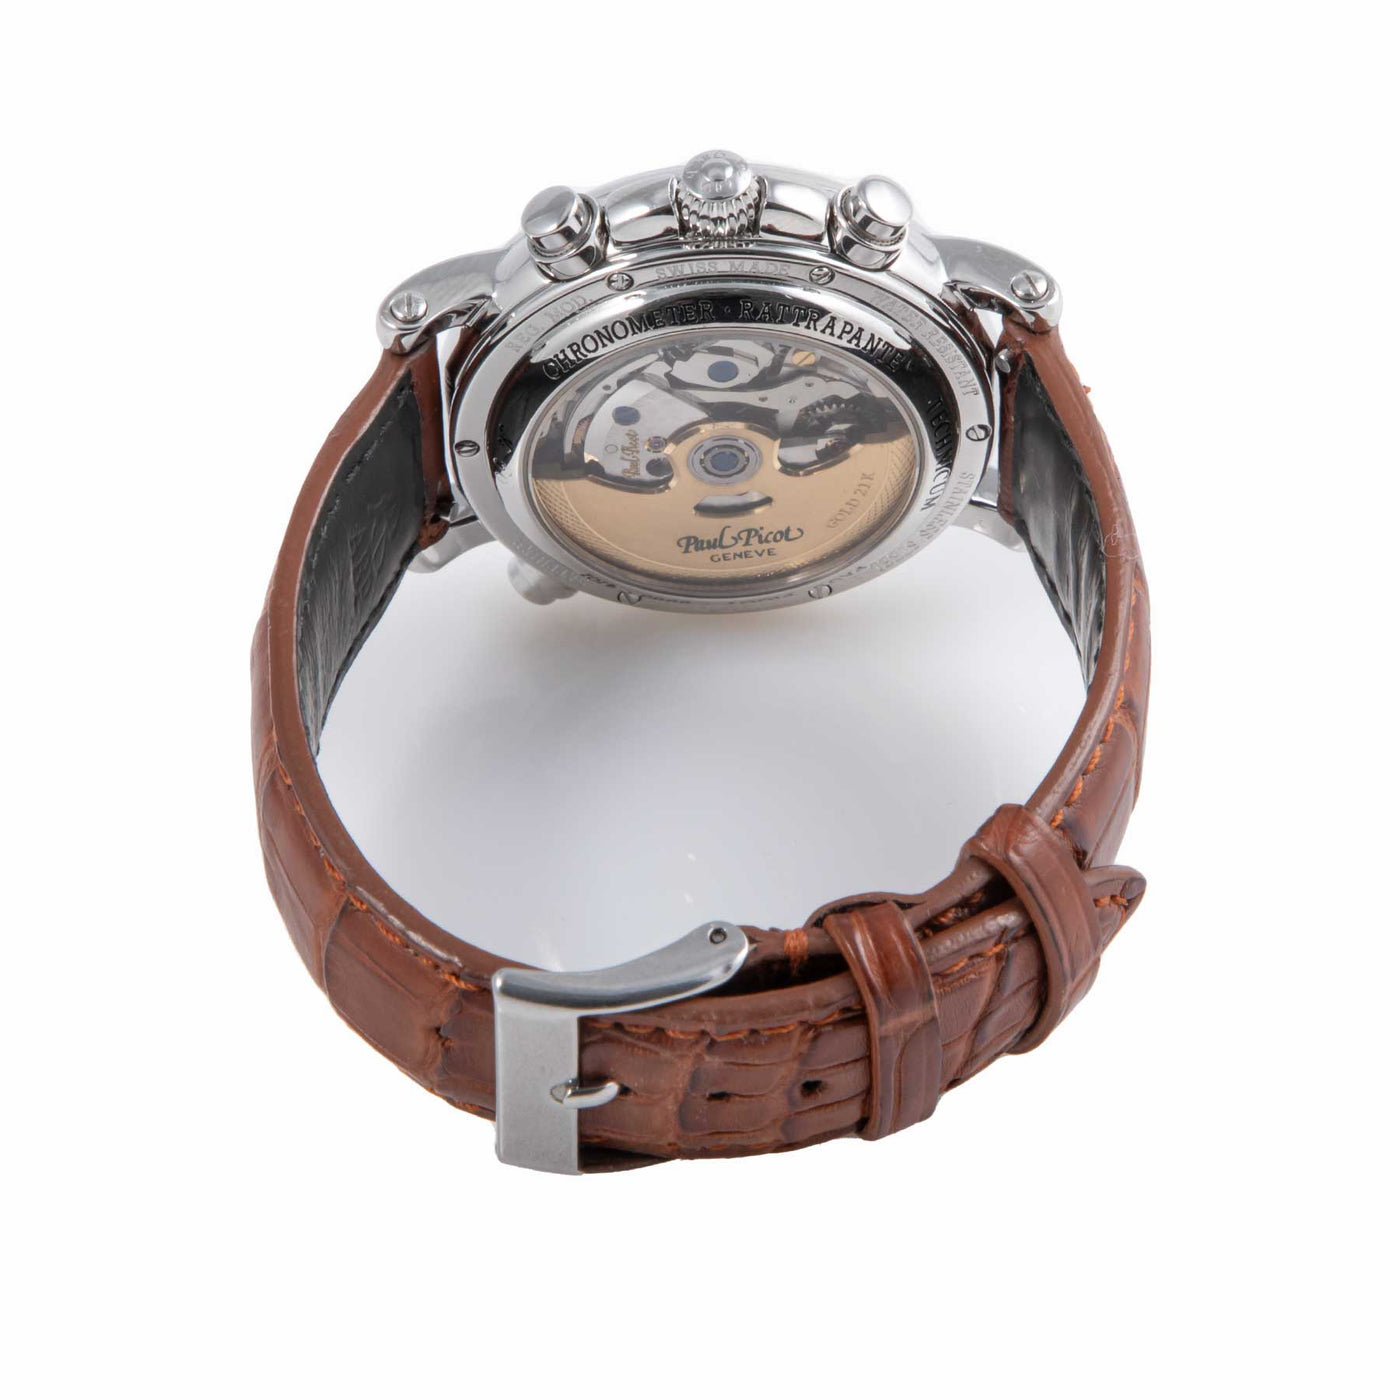 Technicum Chronometre-Timepiece360